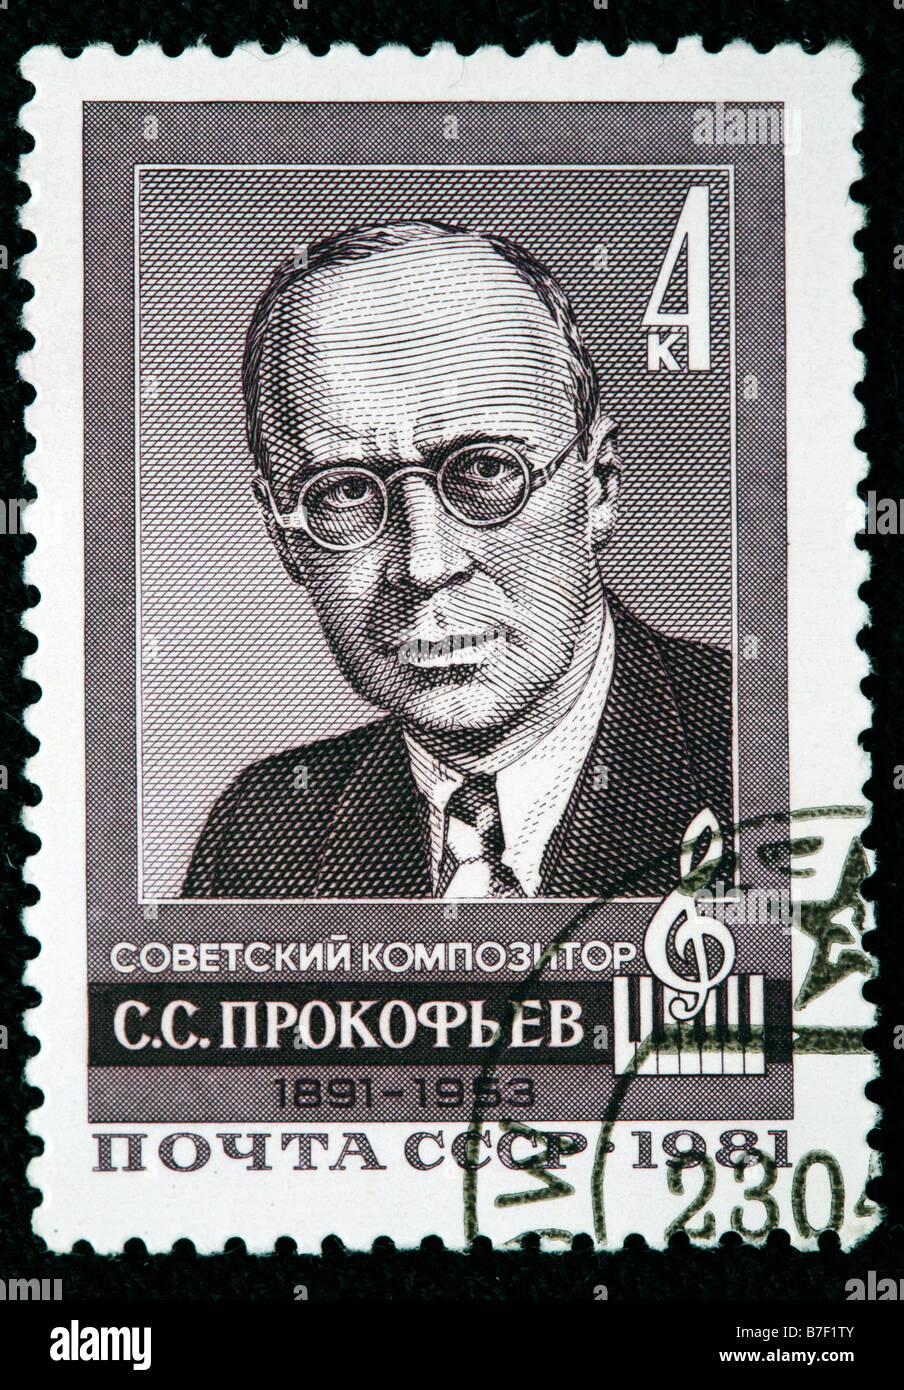 Soviet Russian composer Sergei Prokofiev (1891-1953), postage stamp, USSR, 1981 Stock Photo